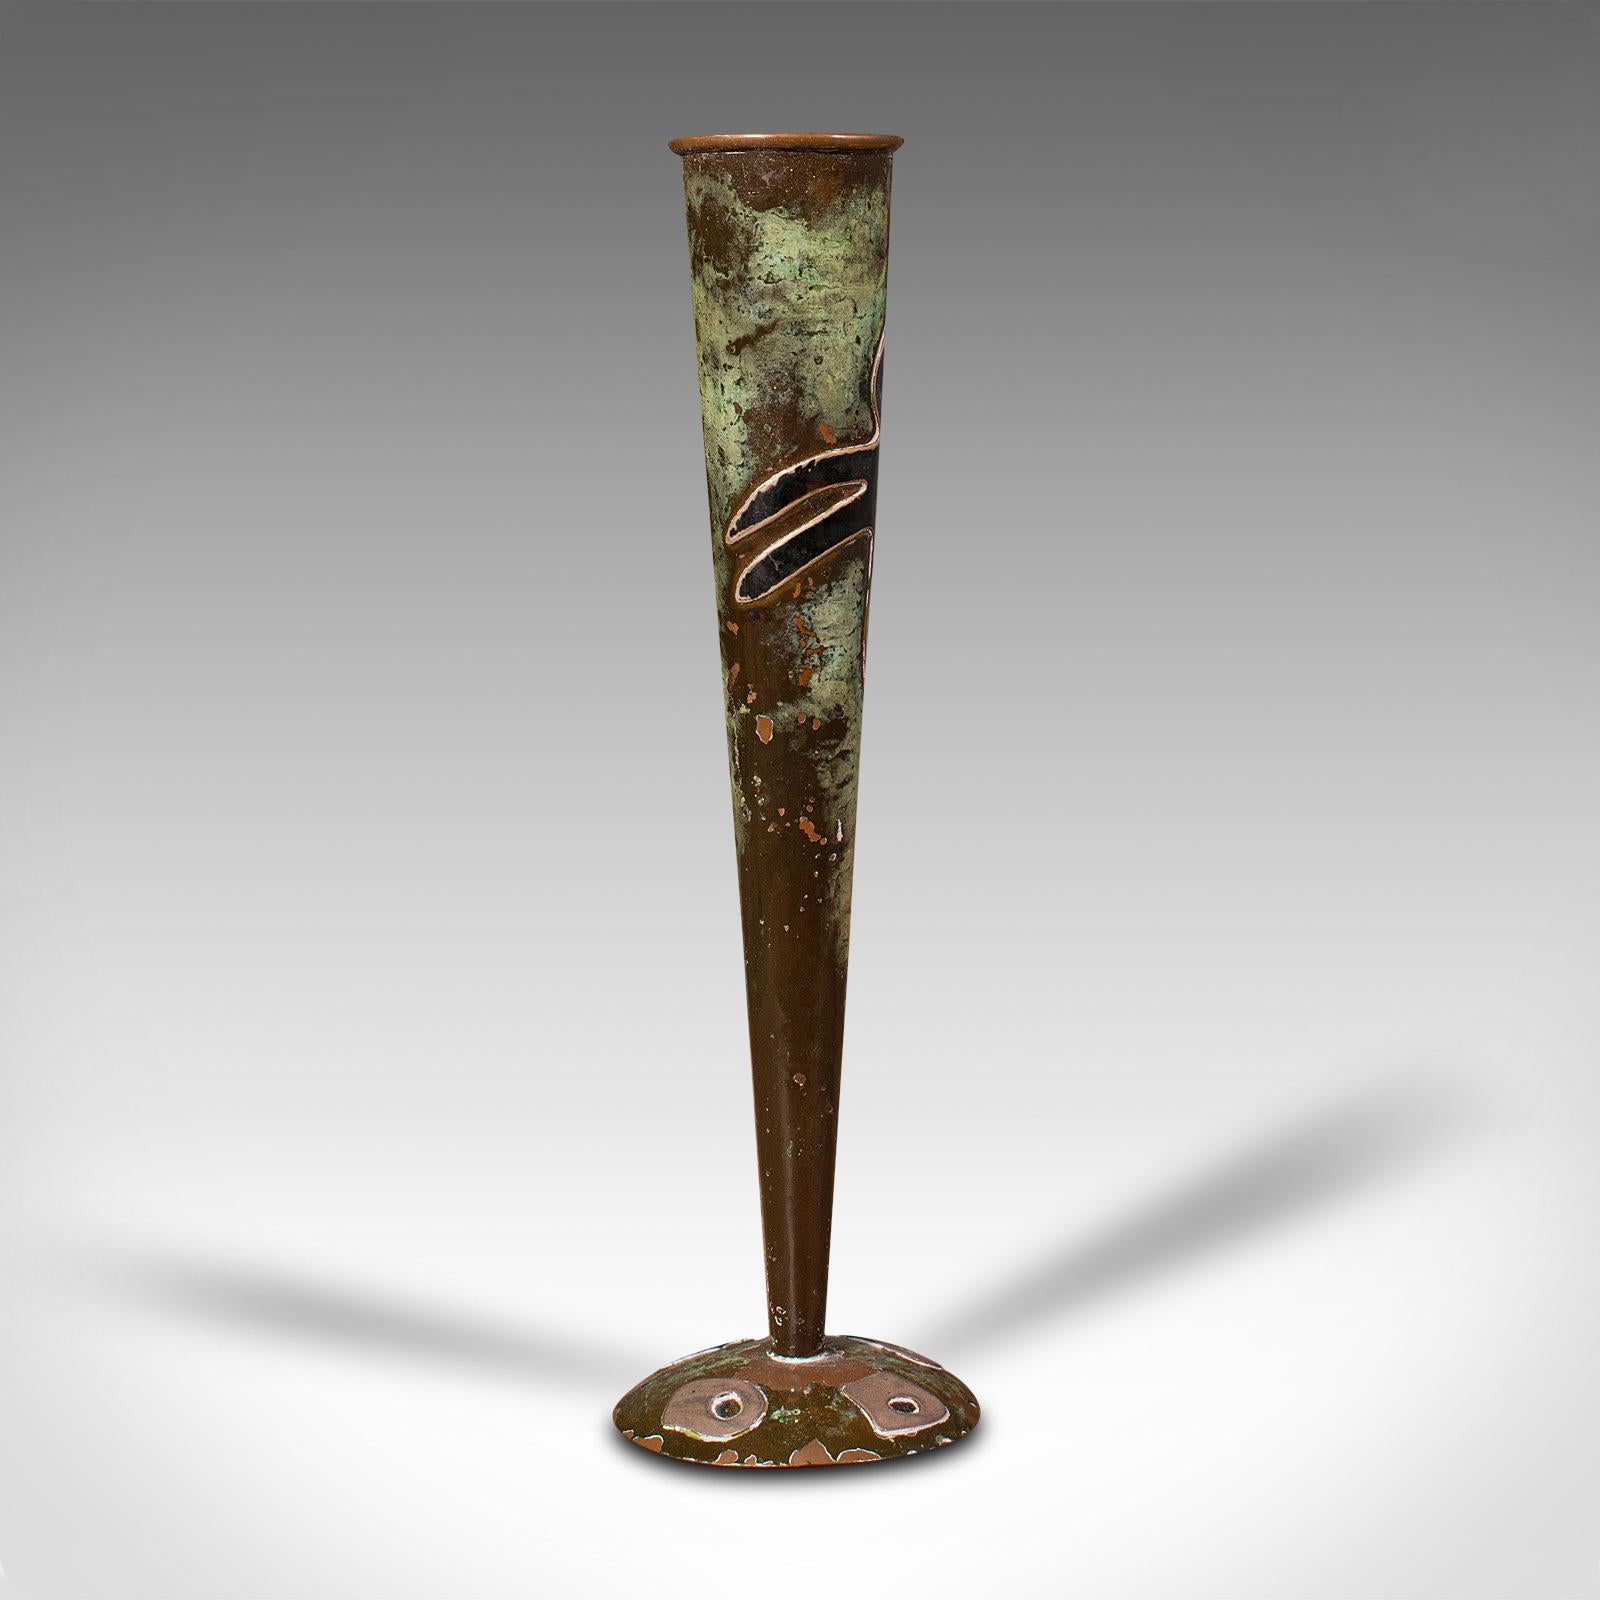 20th Century Pair of Antique Flute Vases, French, Copper, Posy, Art Nouveau Taste, Circa 1920